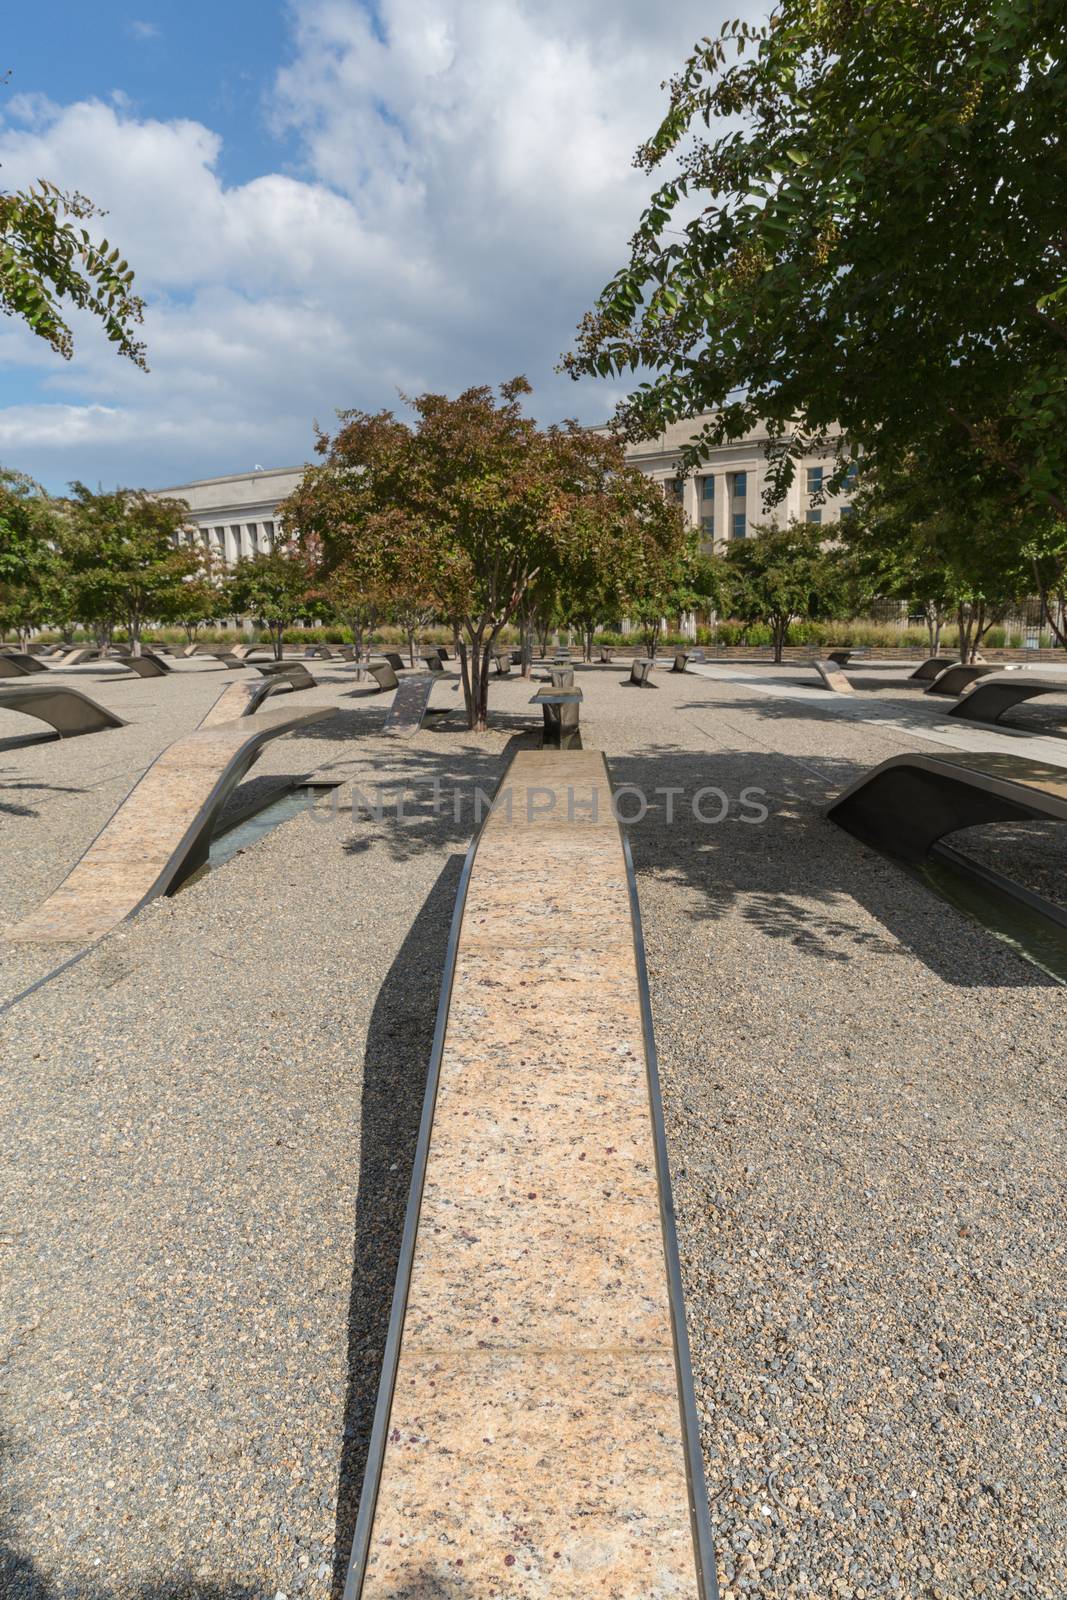 The Pentagon Memorial in Washington DC